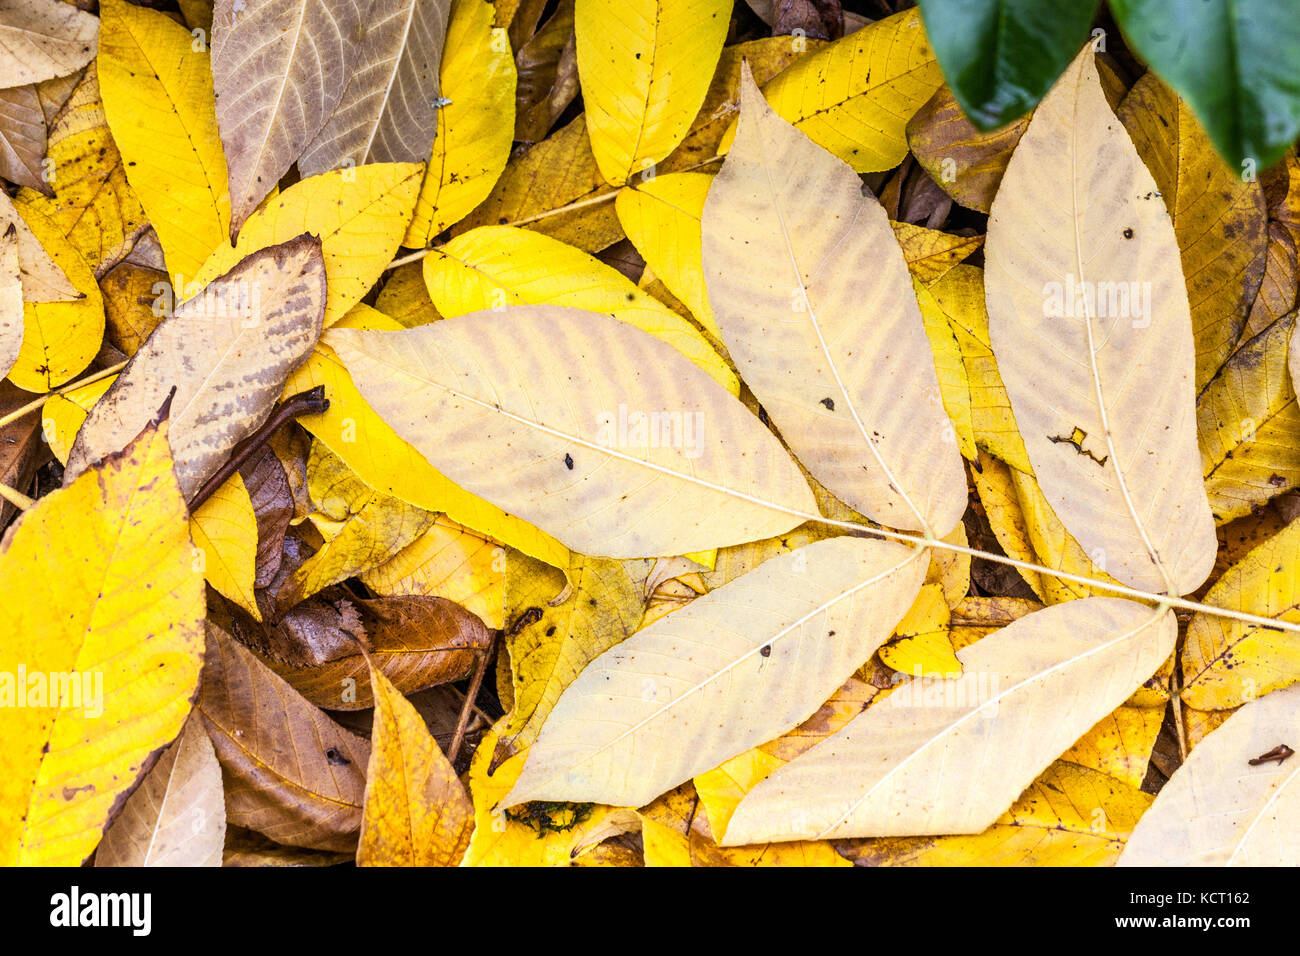 Juglans cathayensis, Chinese Walnut, yellow autumn fallen leaves Stock Photo